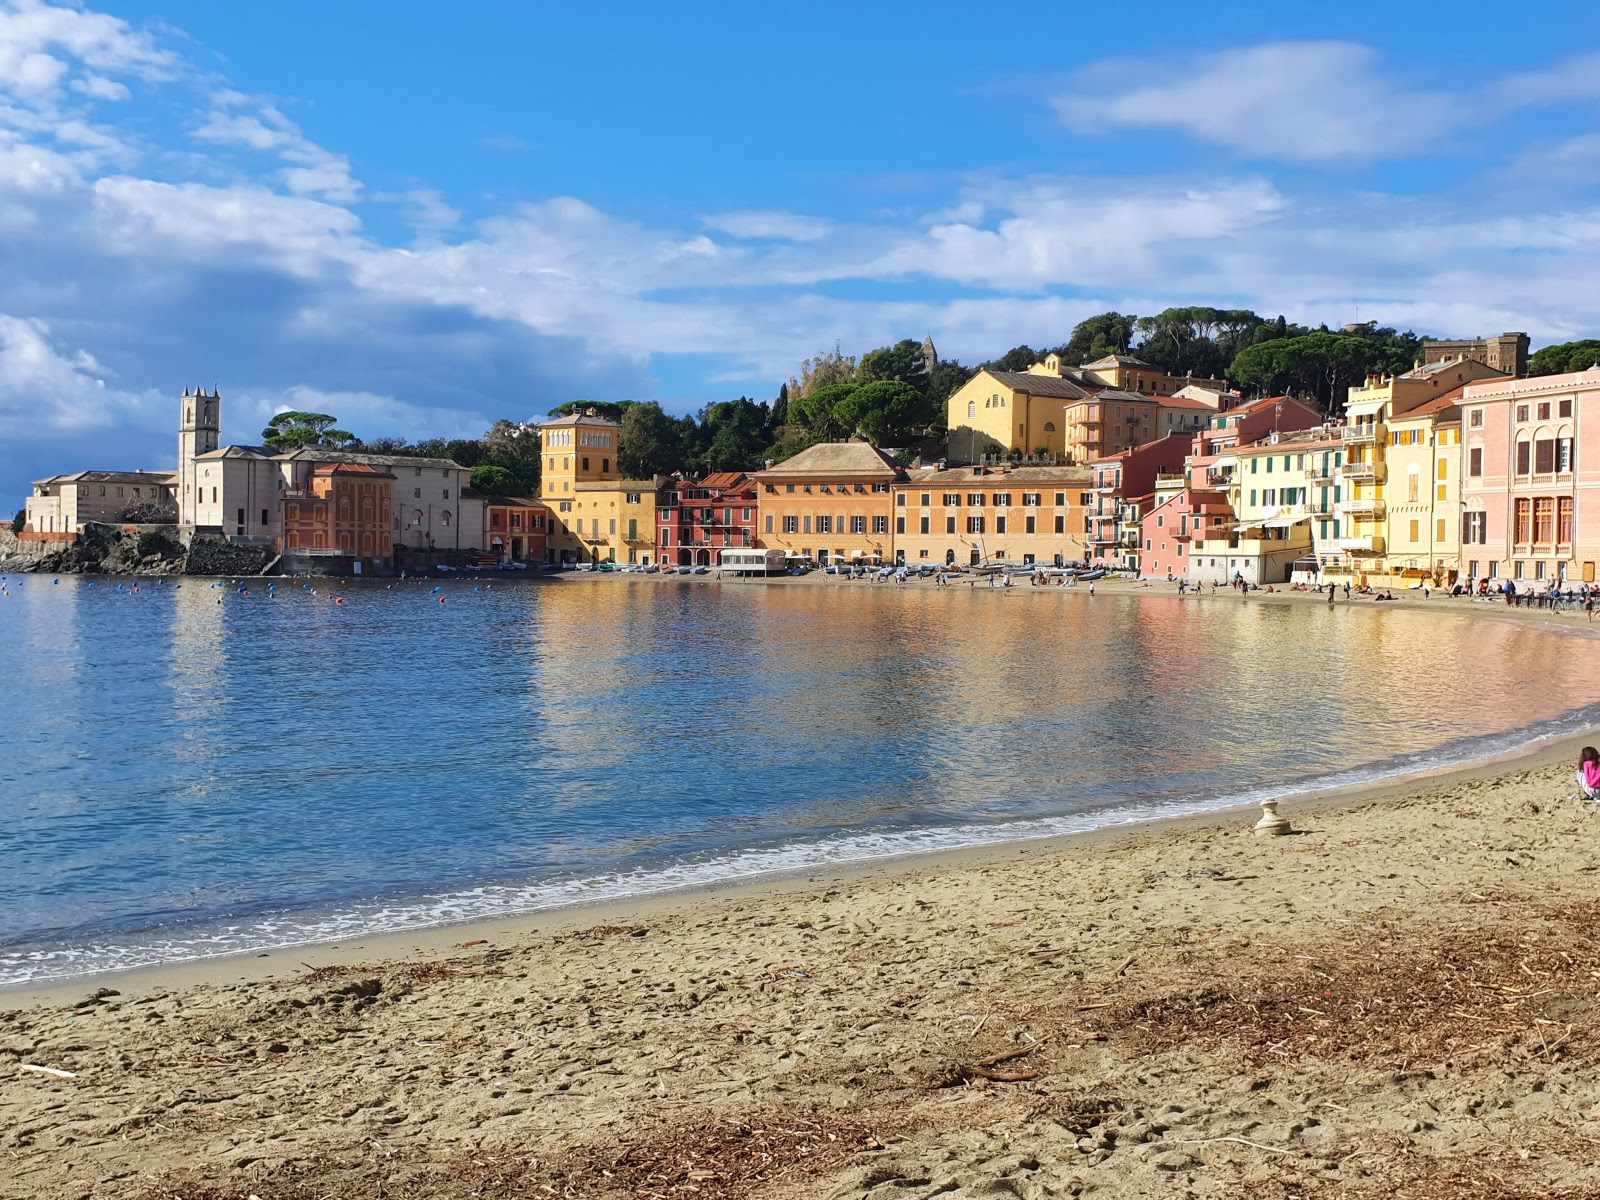 Photo of Spiaggia Baia del Silenzio and its beautiful scenery